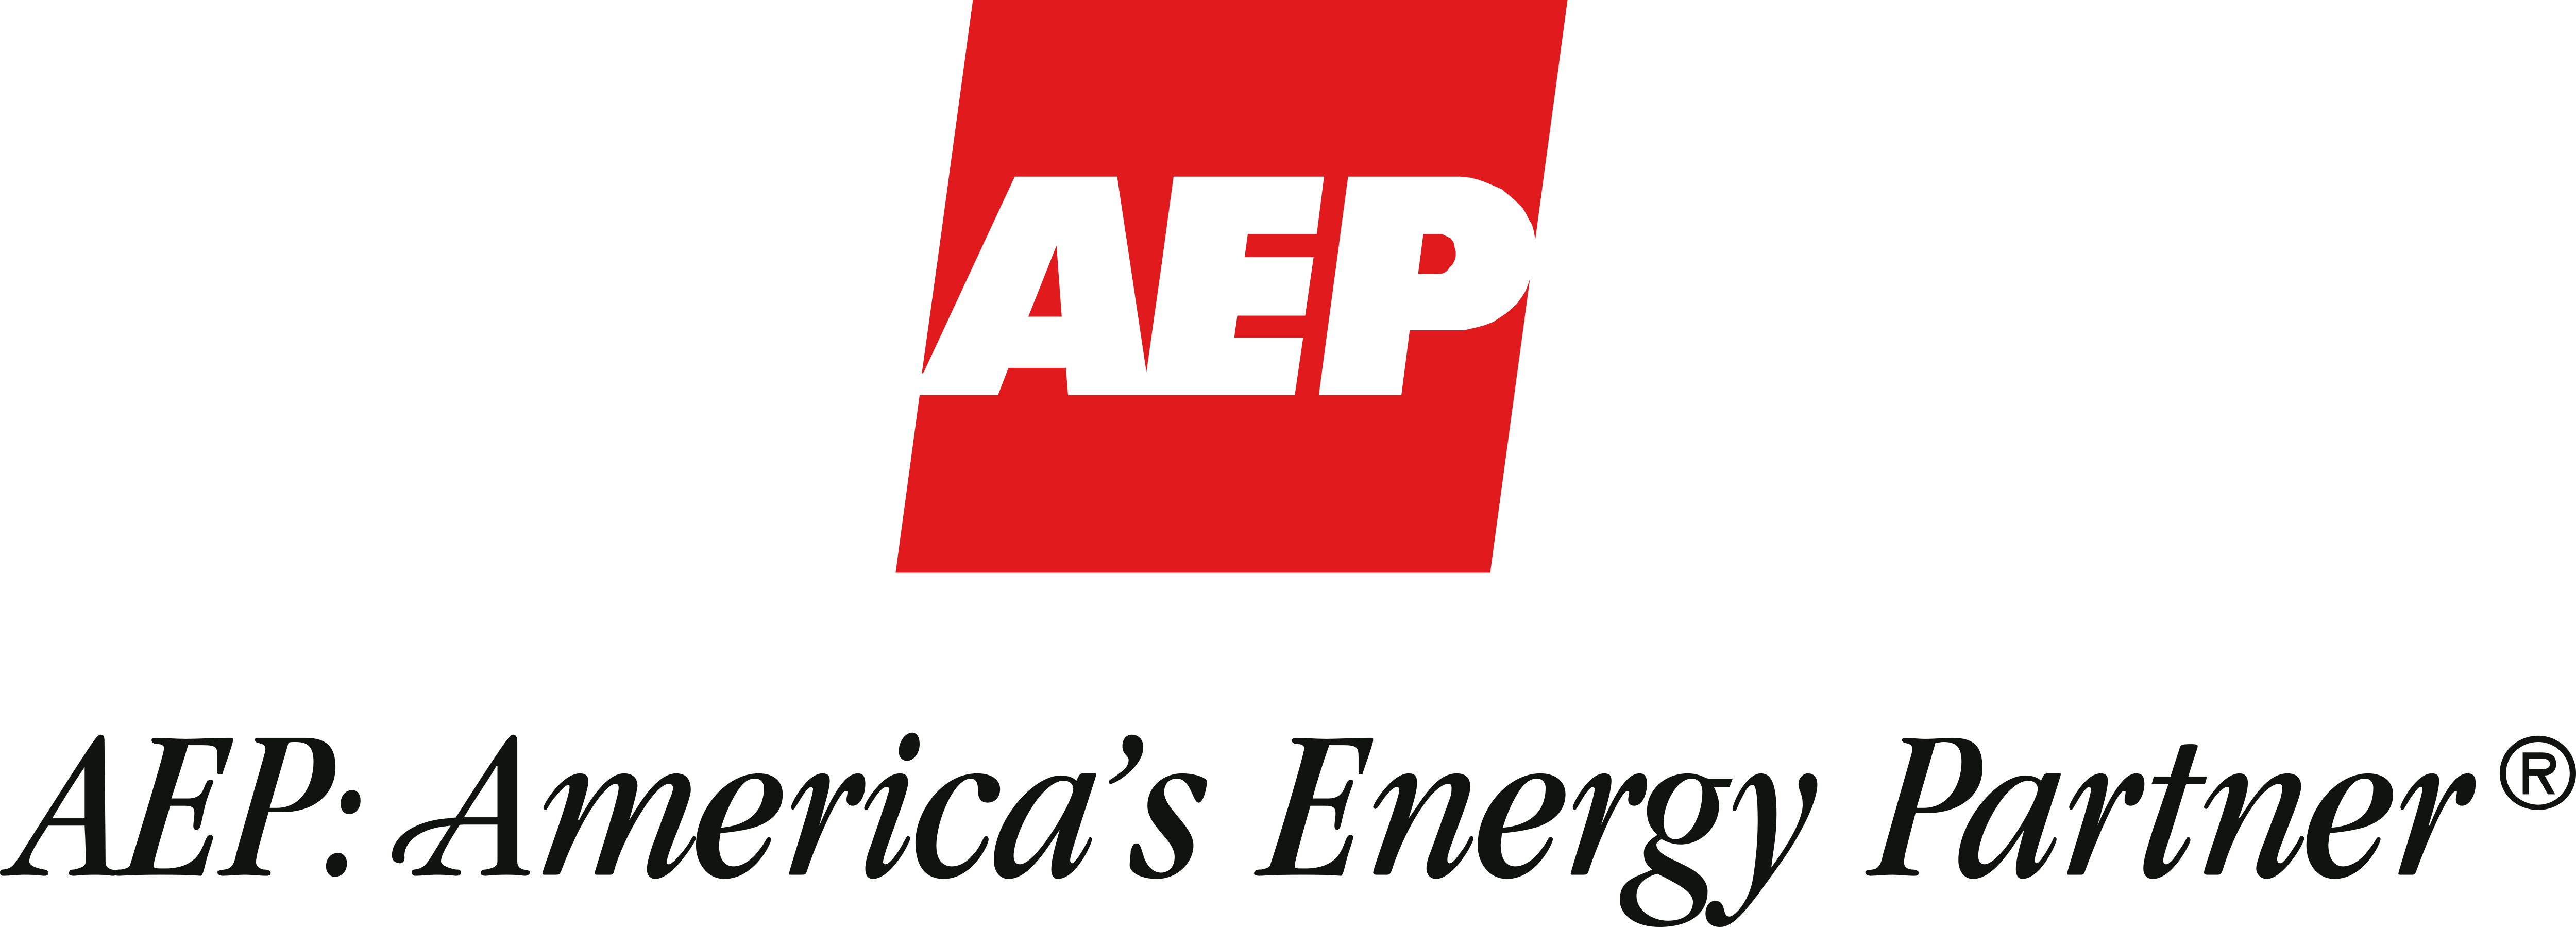 American Electric Power Logos Download